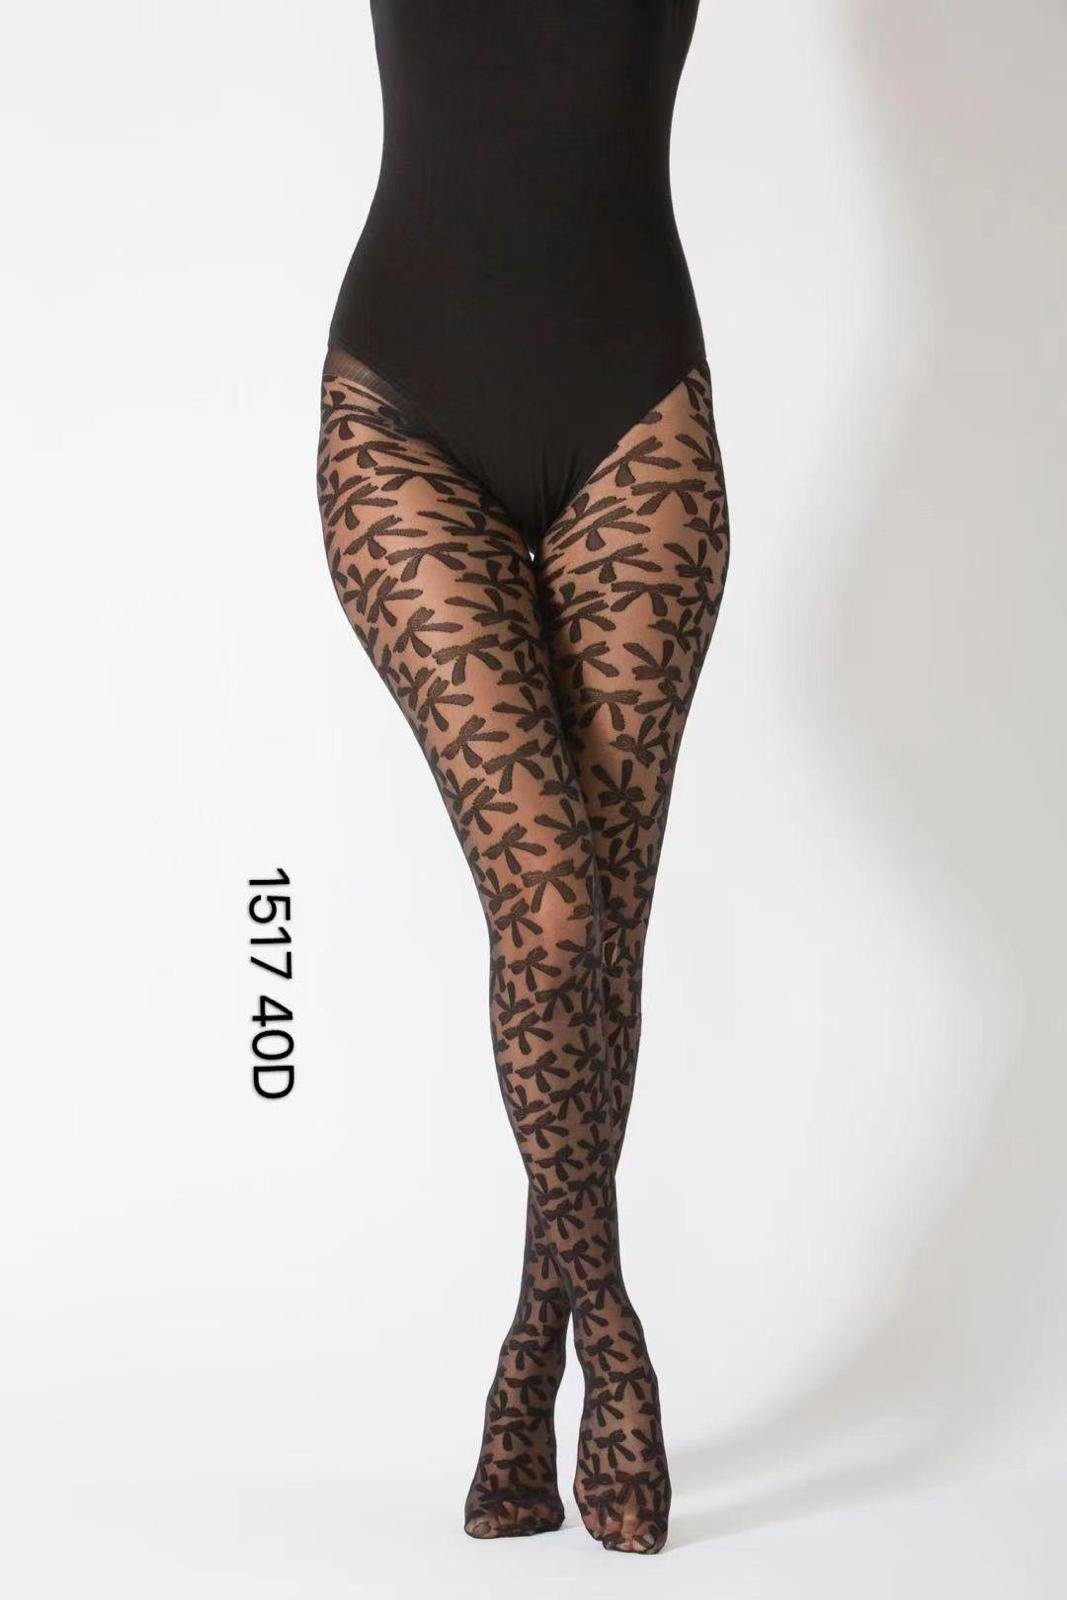 cofi1453 Strumpfhose Damen Strumpfhose mit Hose schwarz 40 Muster Frauen Nero Socken DEN